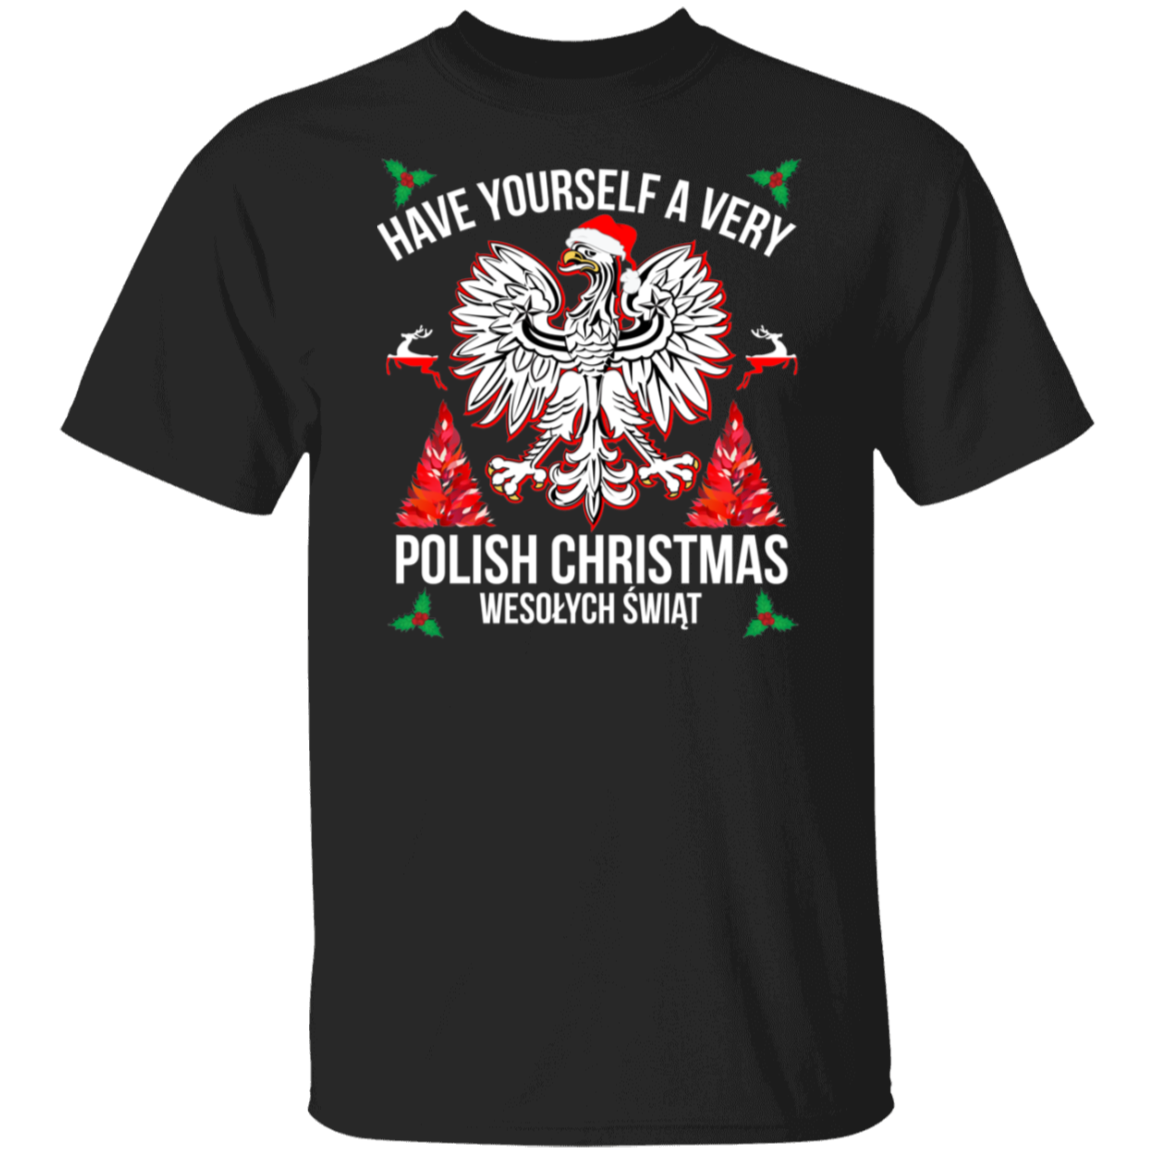 Have Yourself A Very Polish Christmas Apparel CustomCat G500 5.3 oz. T-Shirt Black S